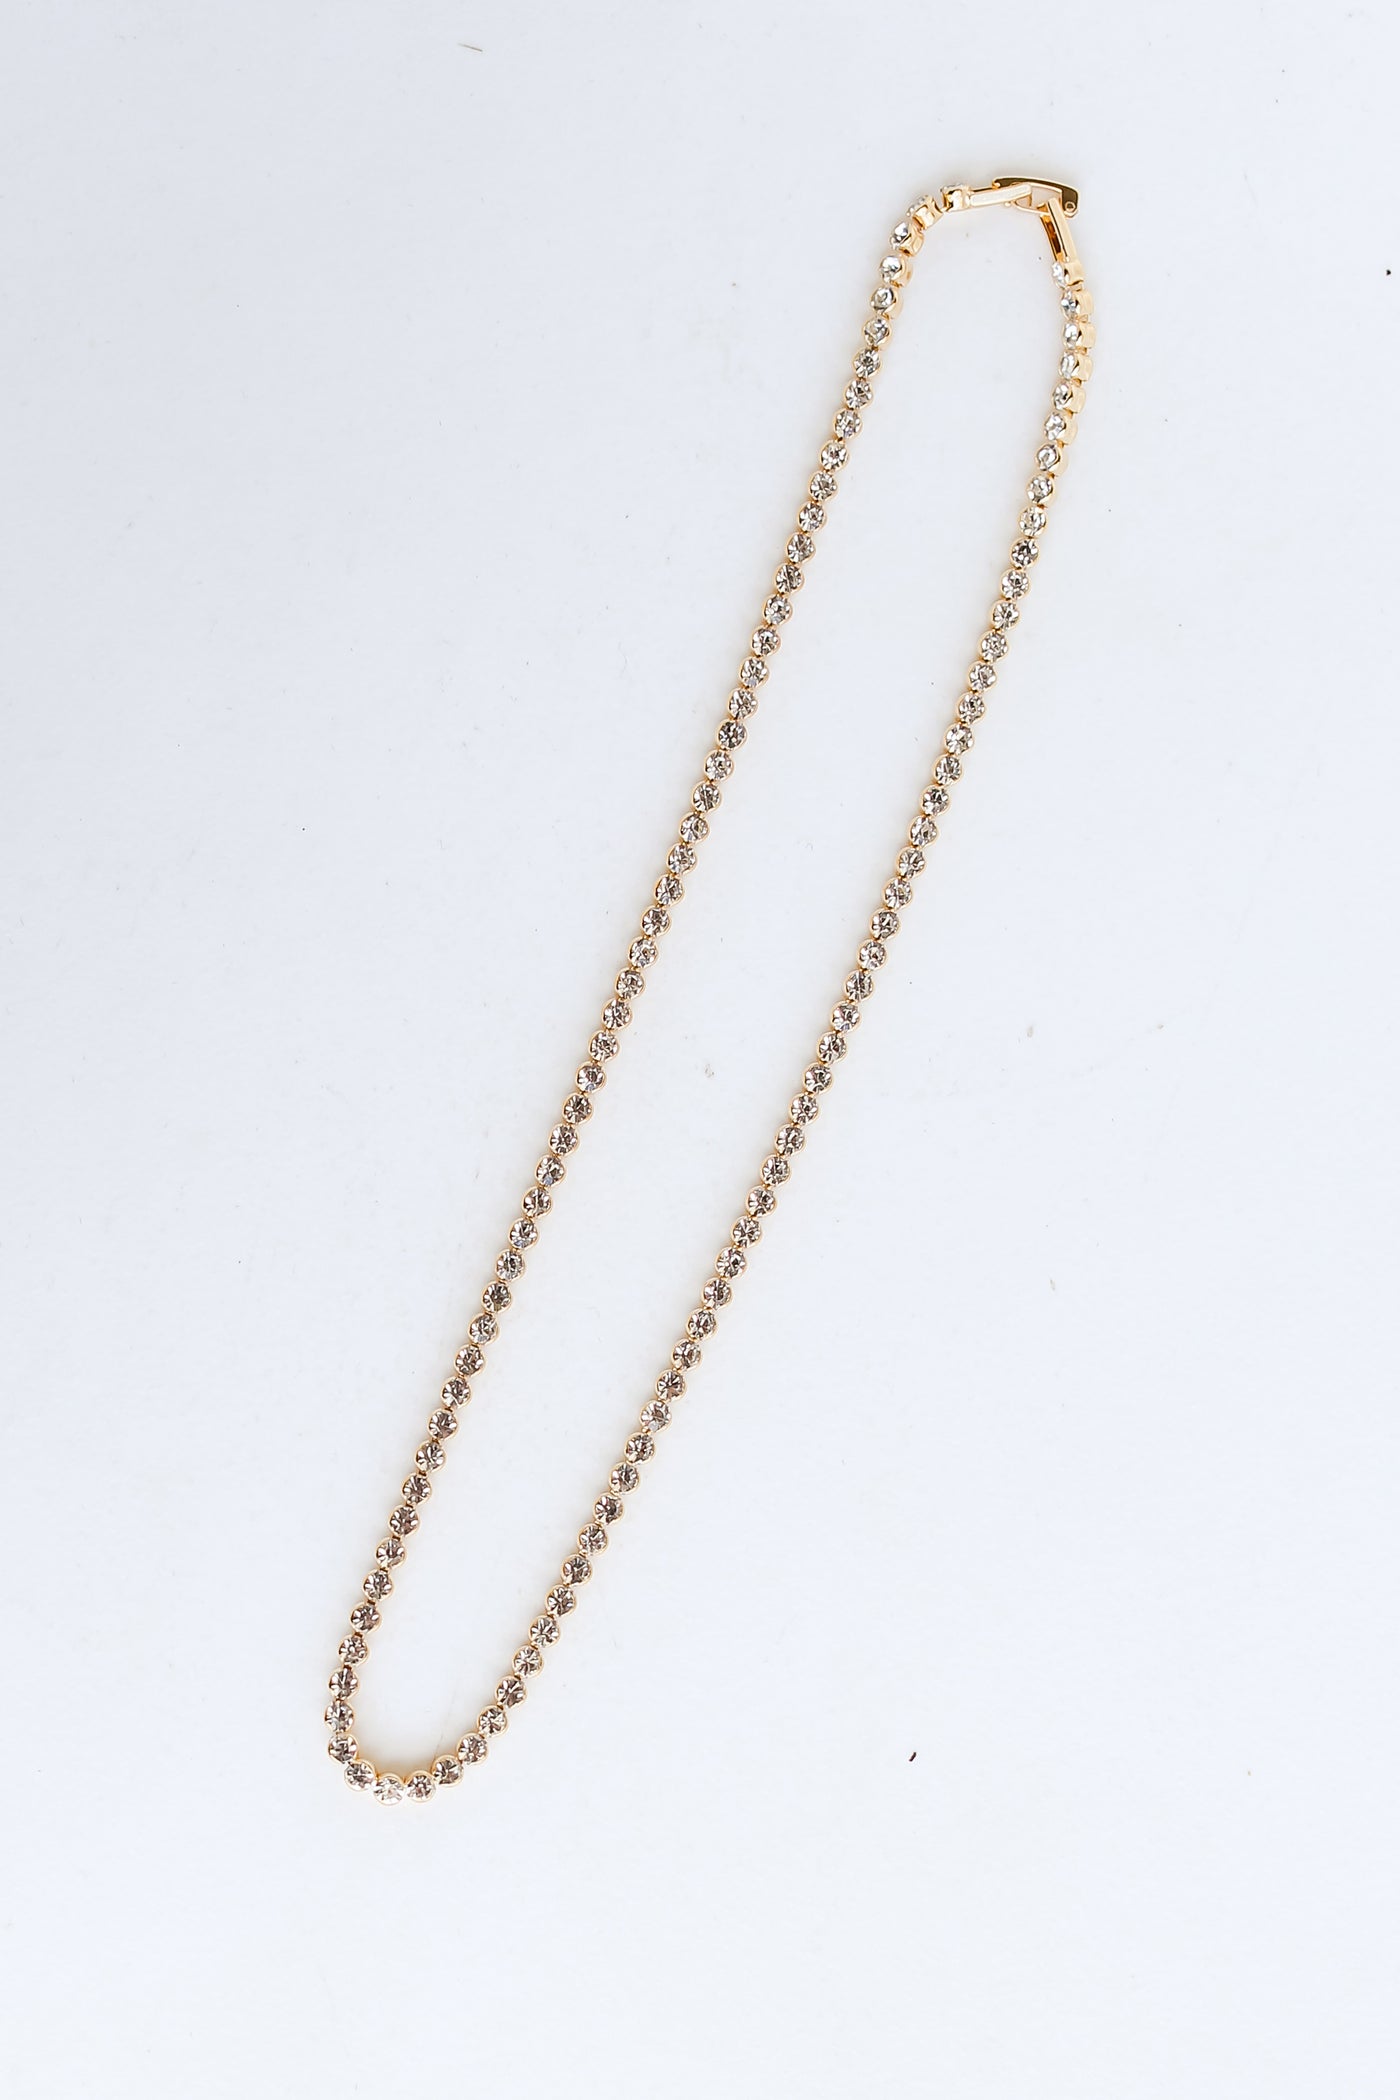 Gold Rhinestone Necklace flat lay